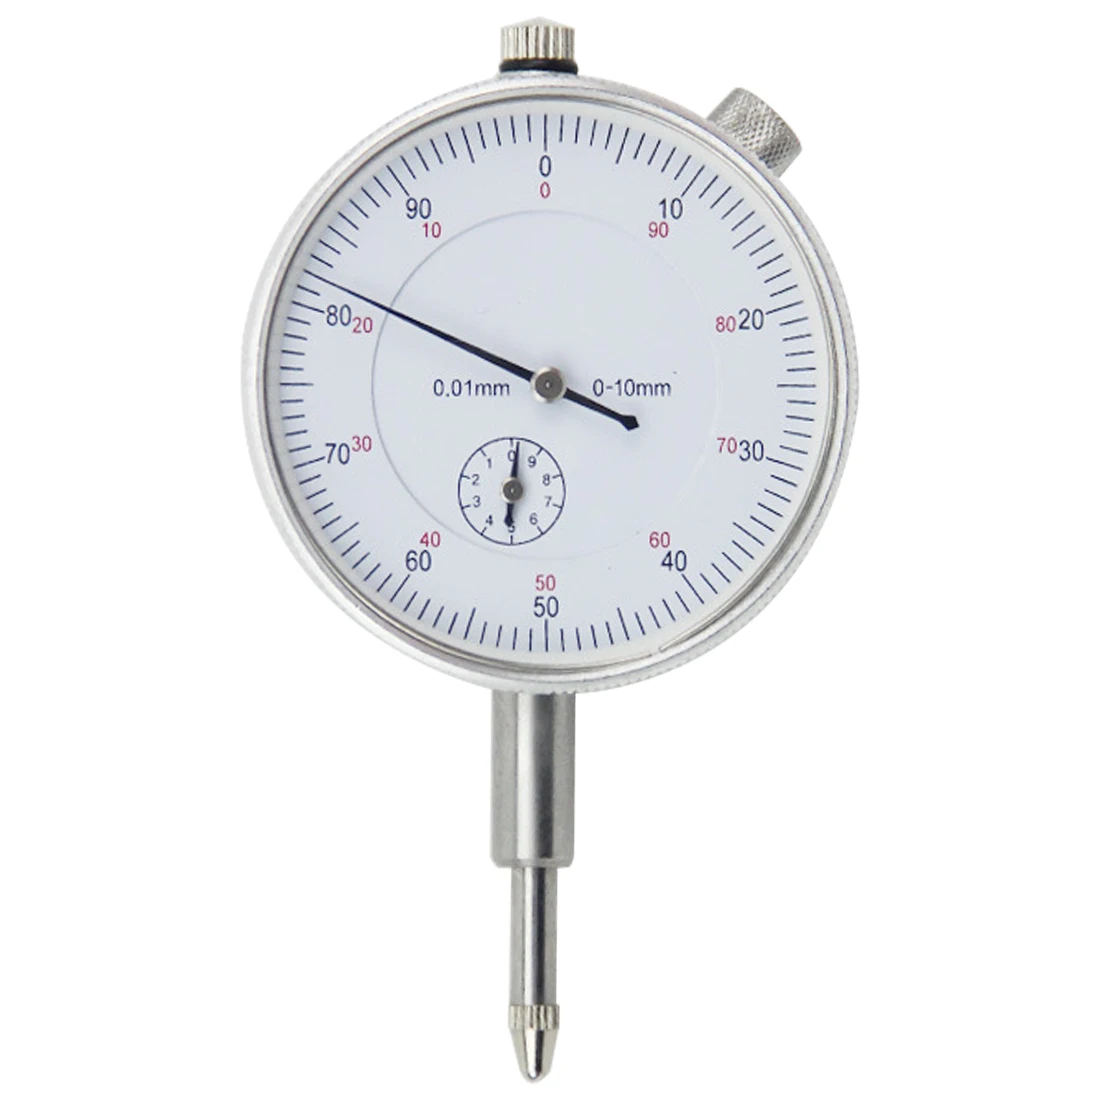 0.01mm Resolution Indicator Gauge mesure instrument Tool dial gauge ...